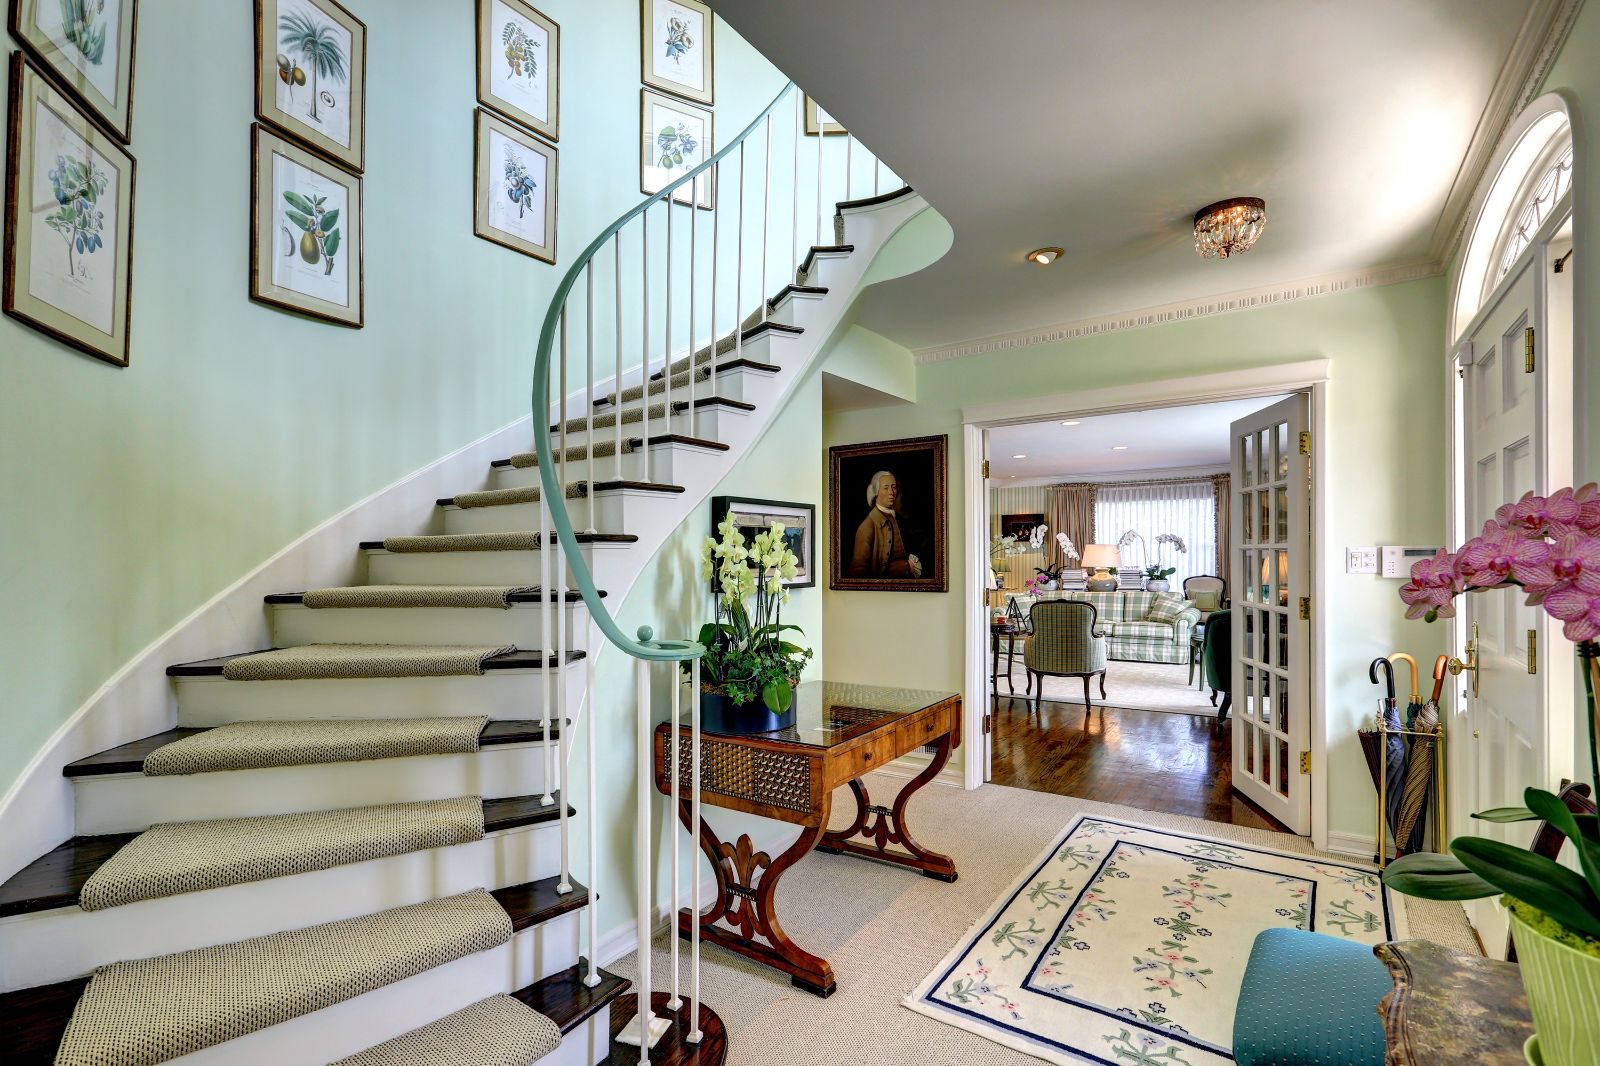 Staircase and hallway at Flicker Way Estate villa in Los Angeles, USA